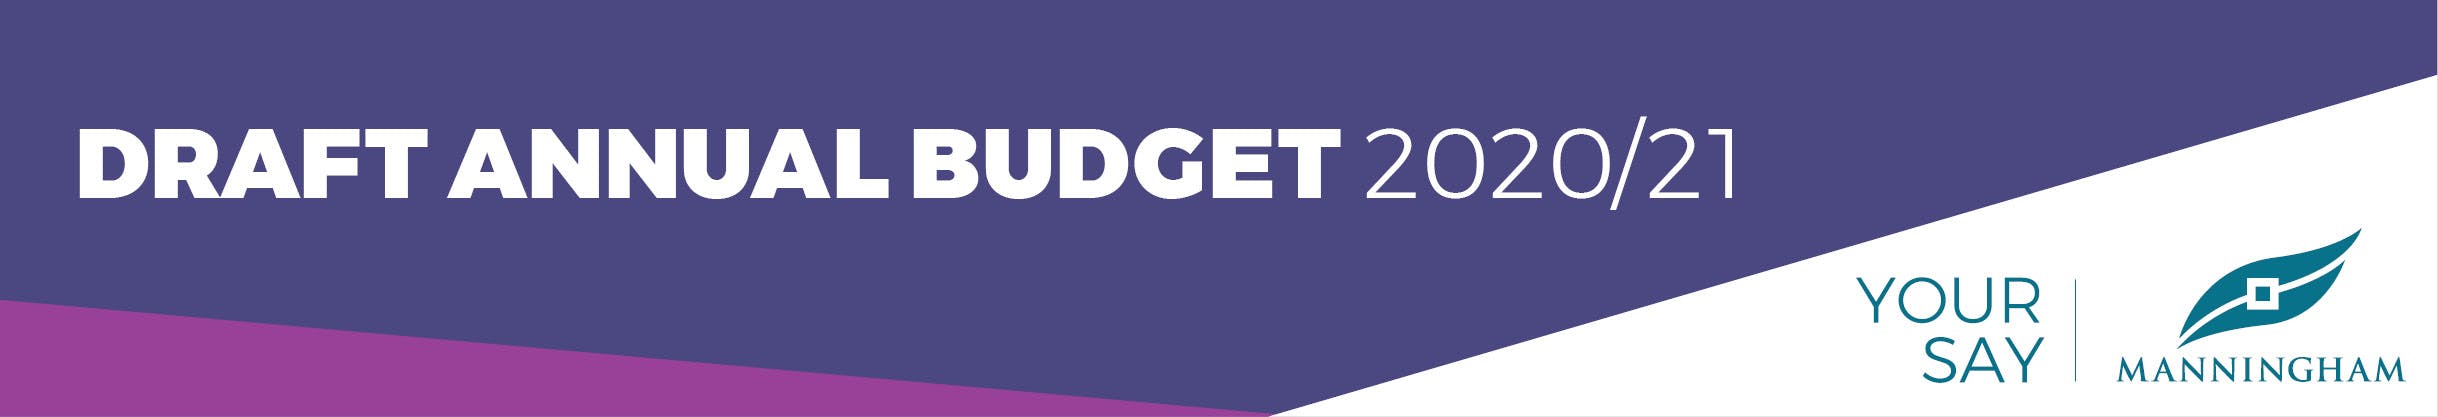 Draft Annual Budget 2020/21